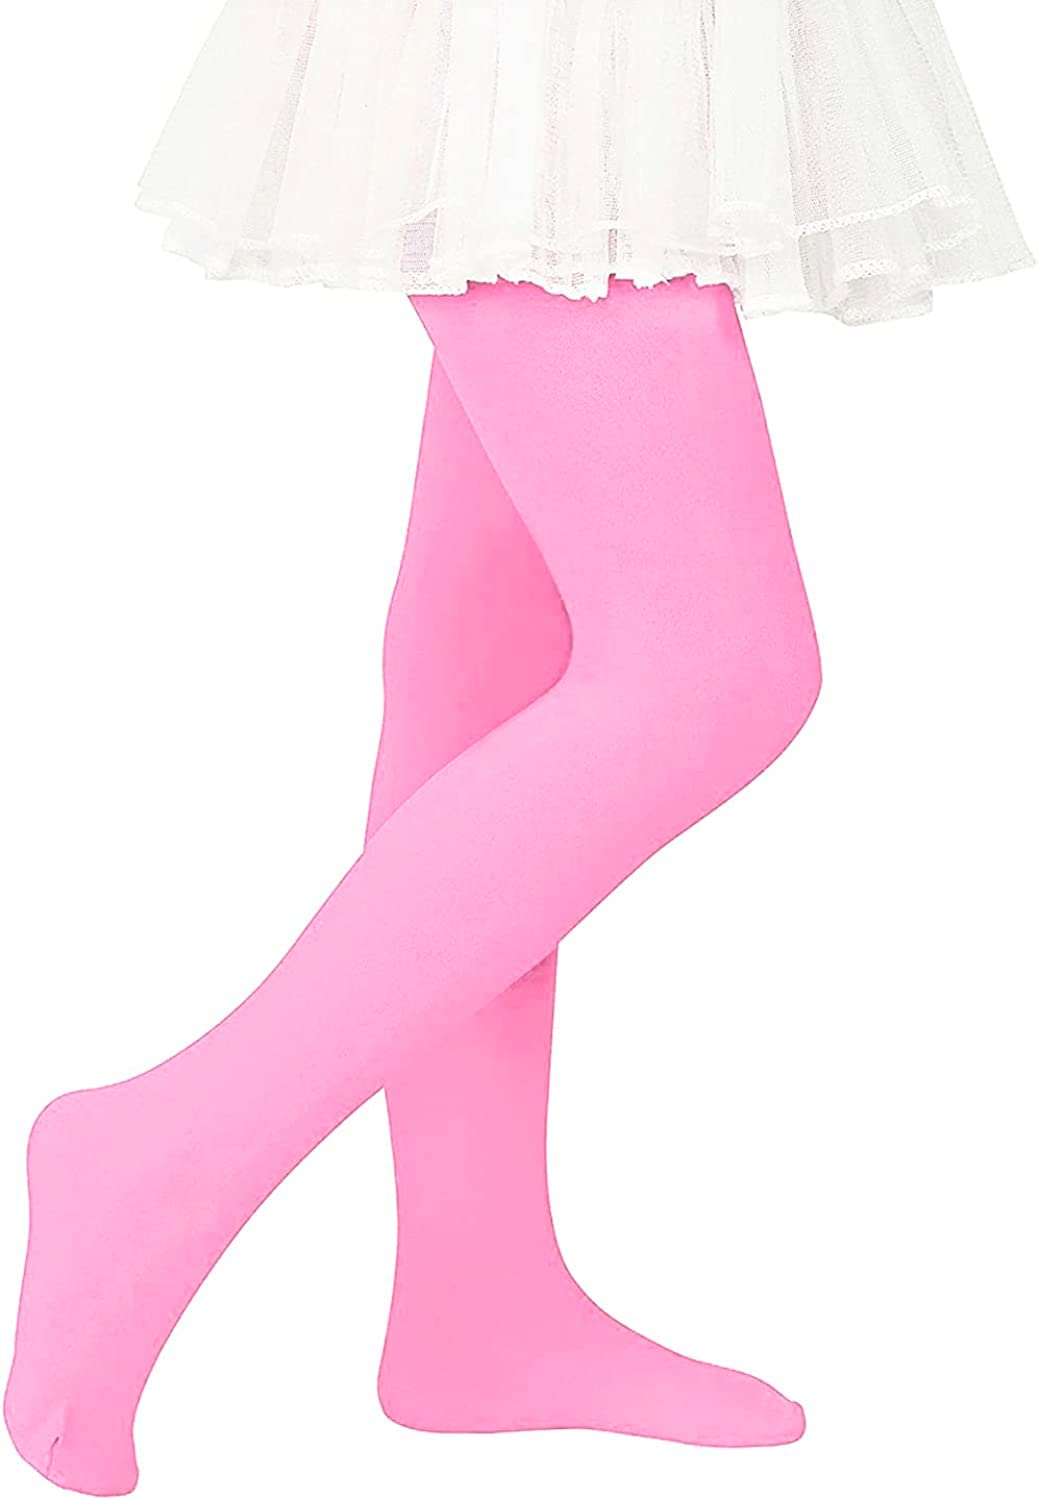 Women's Pink Tights, Pantyhose & Hosiery